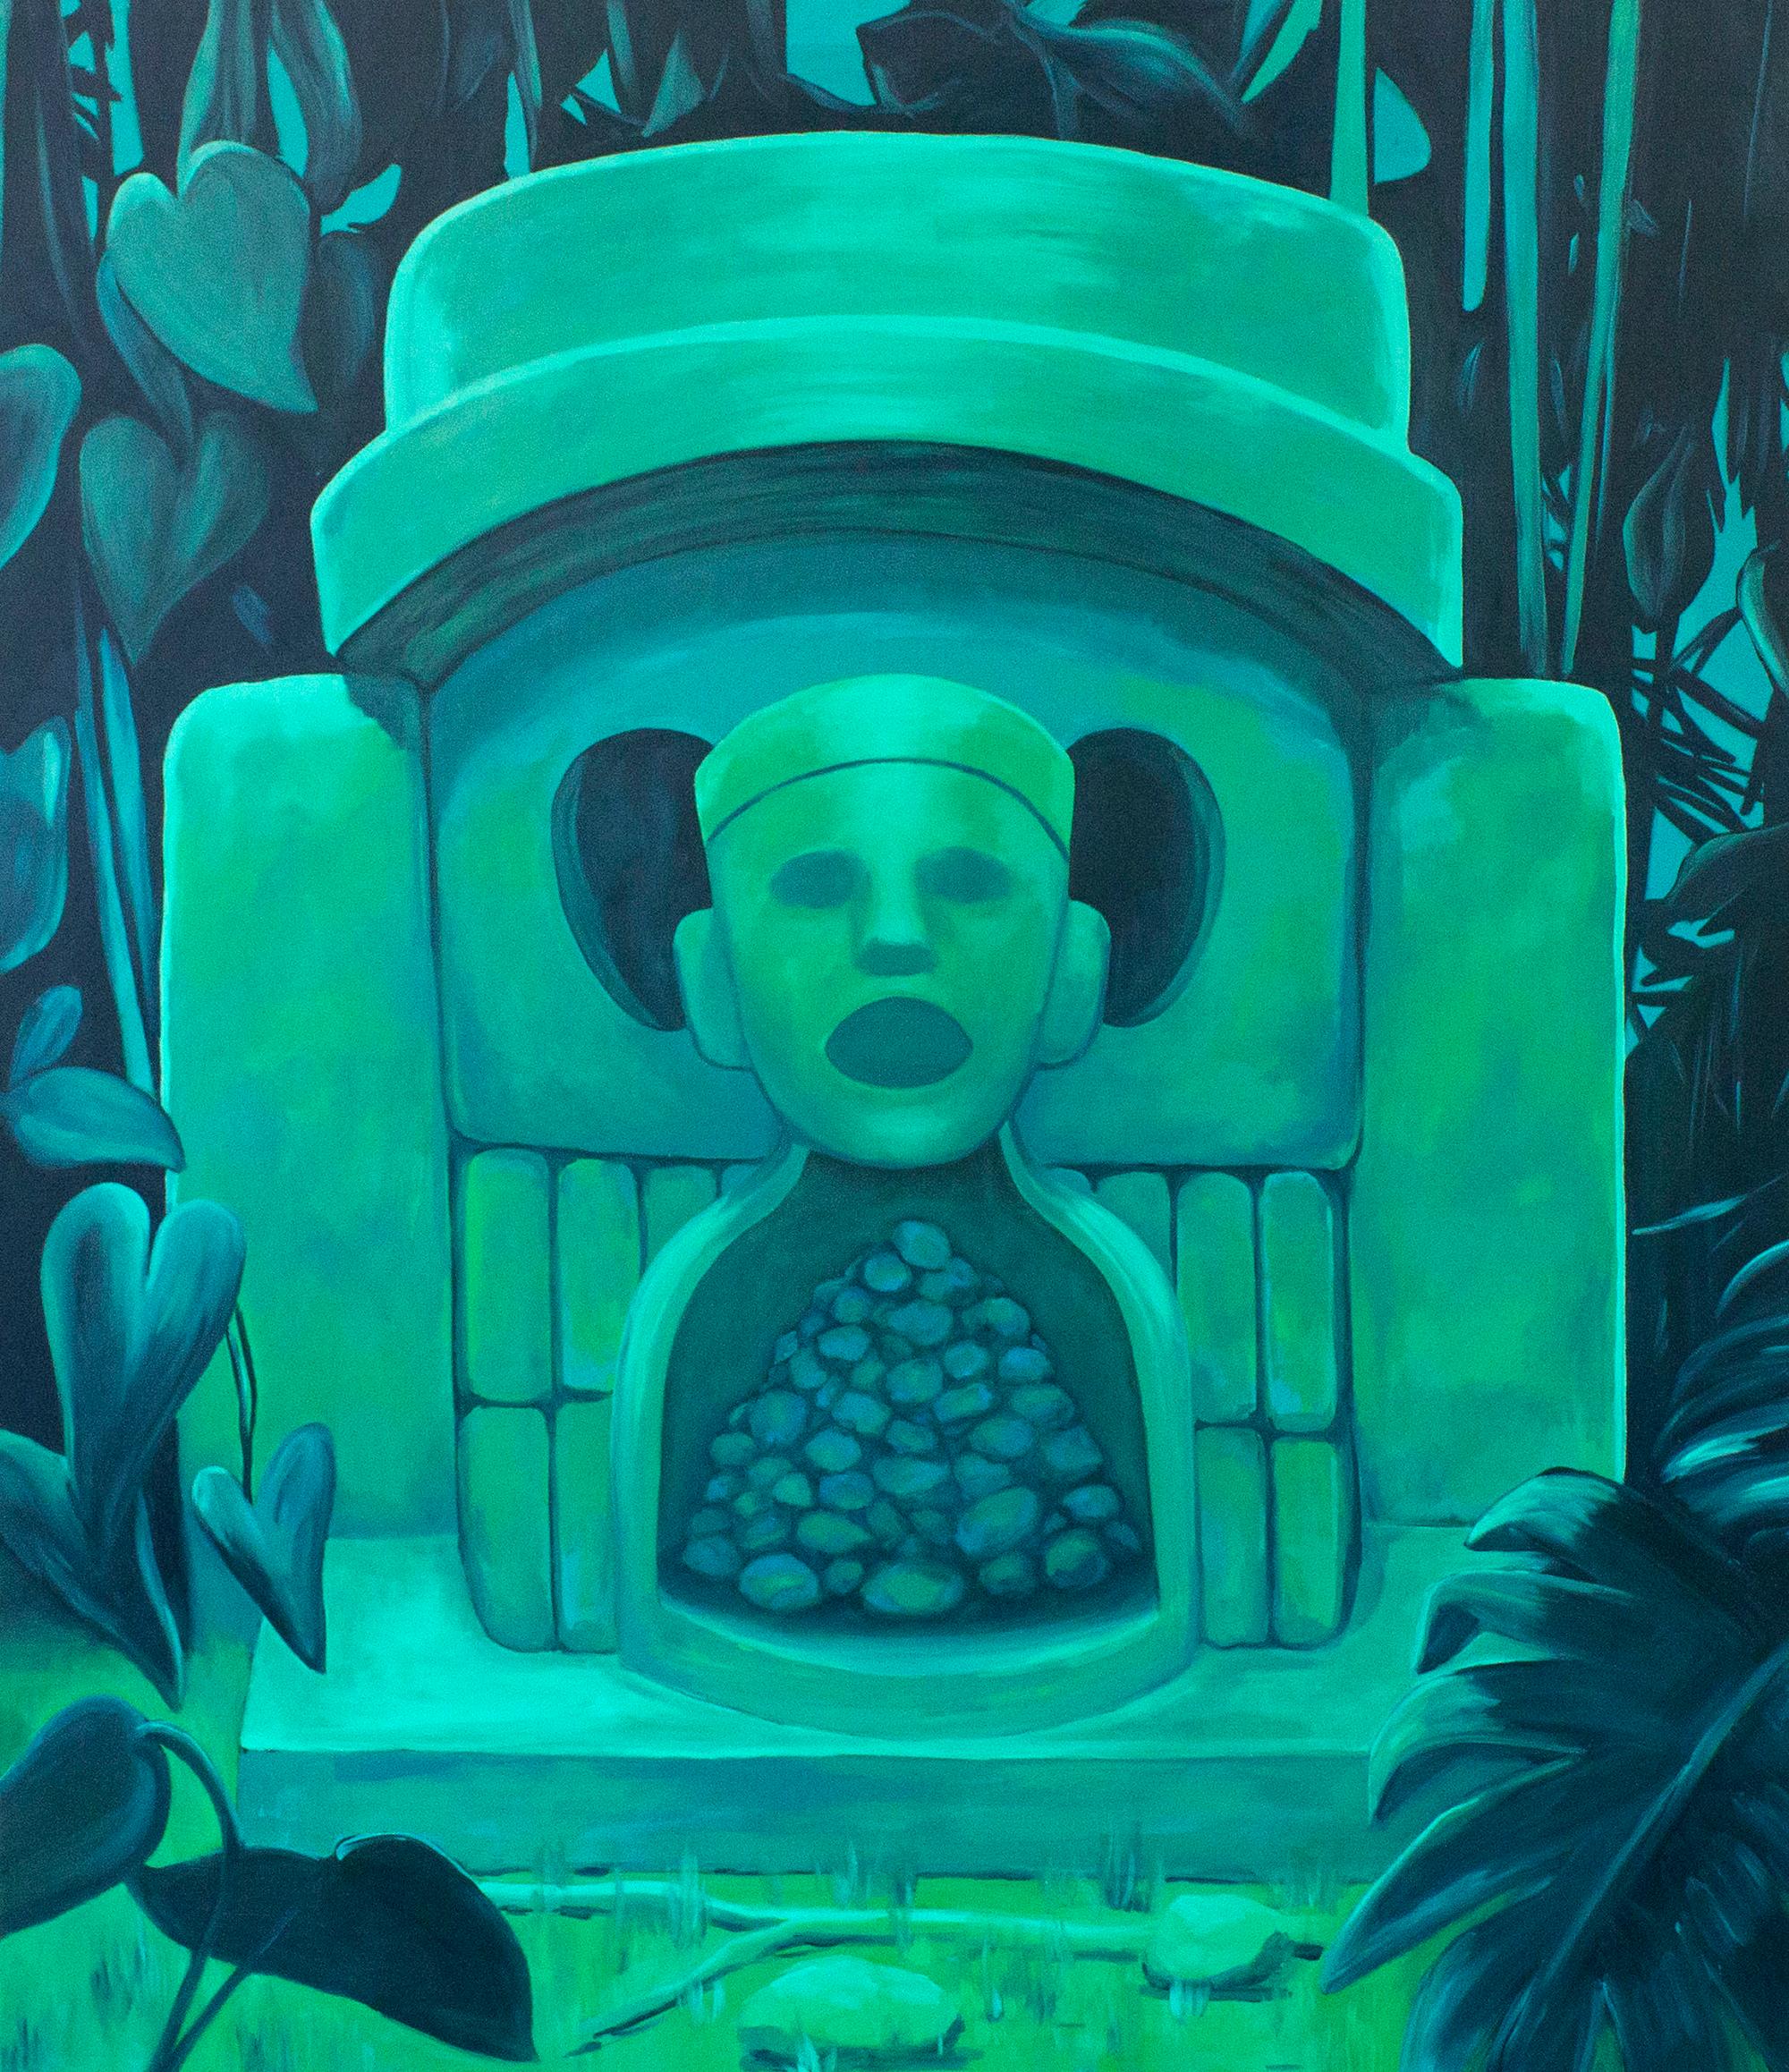 "HABÍA ANTES", oil painting on canvas, shrine, green, jungle, skull, coronavirus